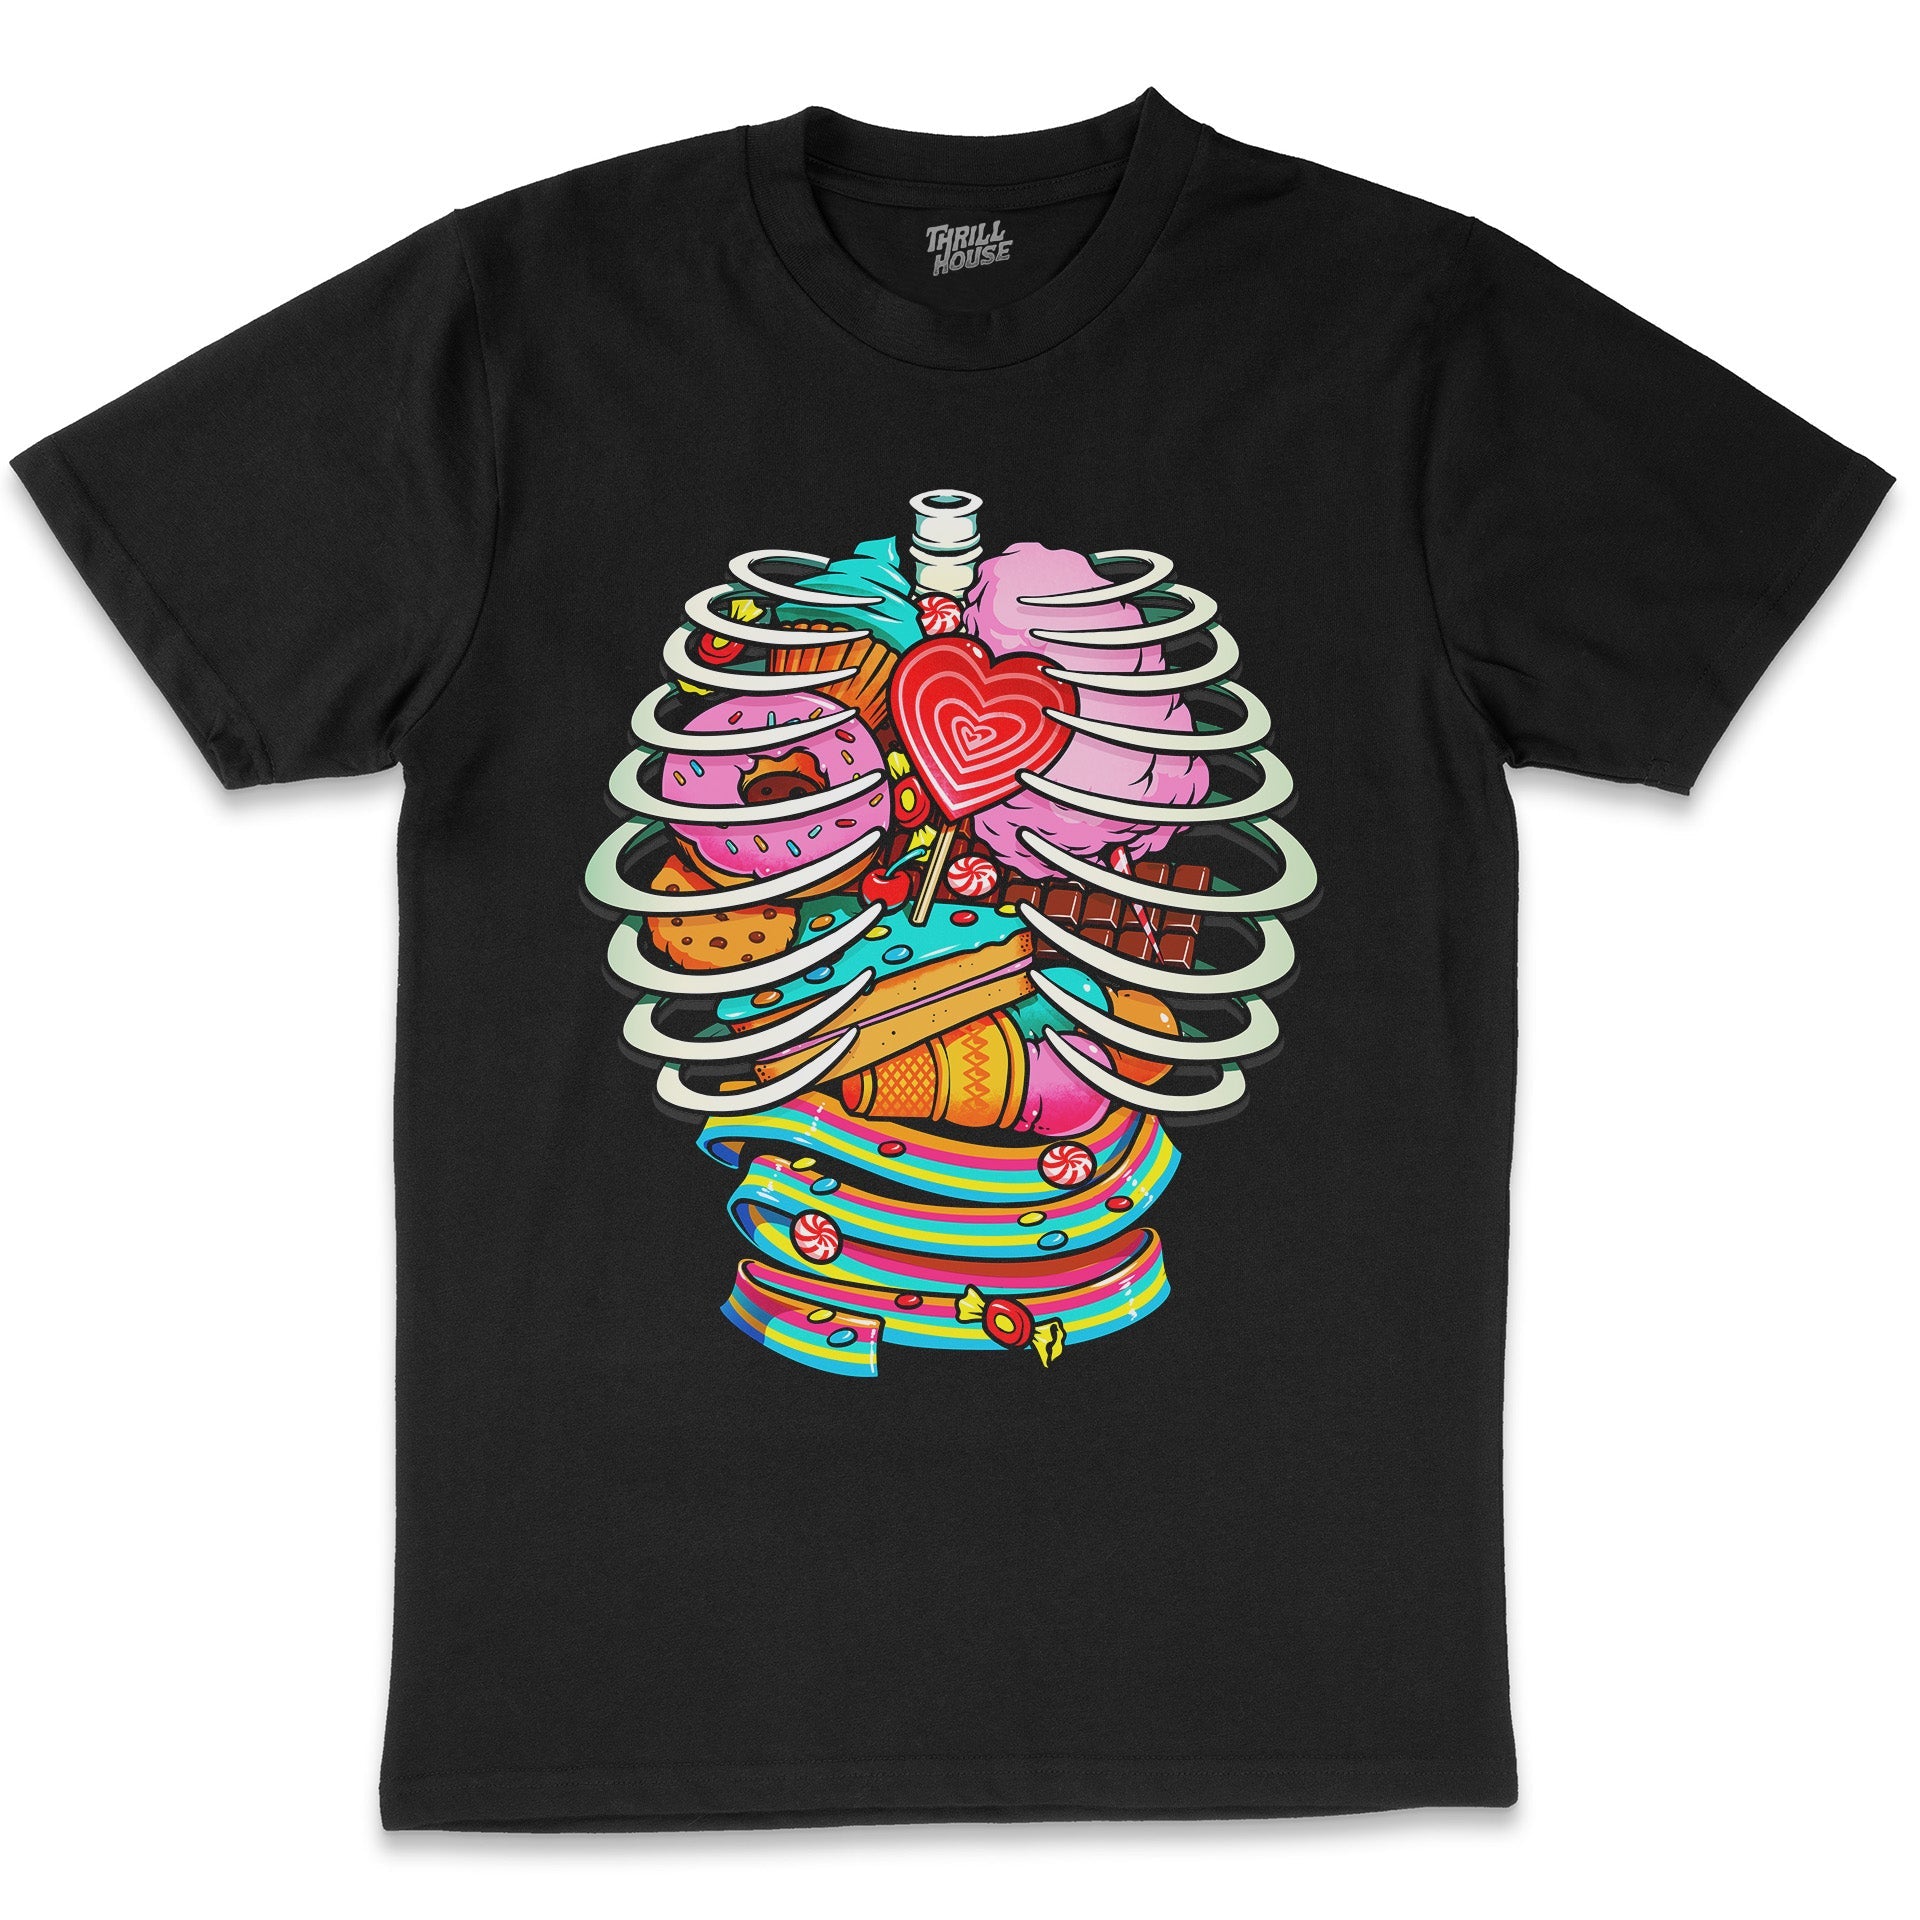 Unicorn Anatomy Sweet Inside Candy X-Ray Sweets Fantasy Animal Humorous Geek Cotton T-Shirt